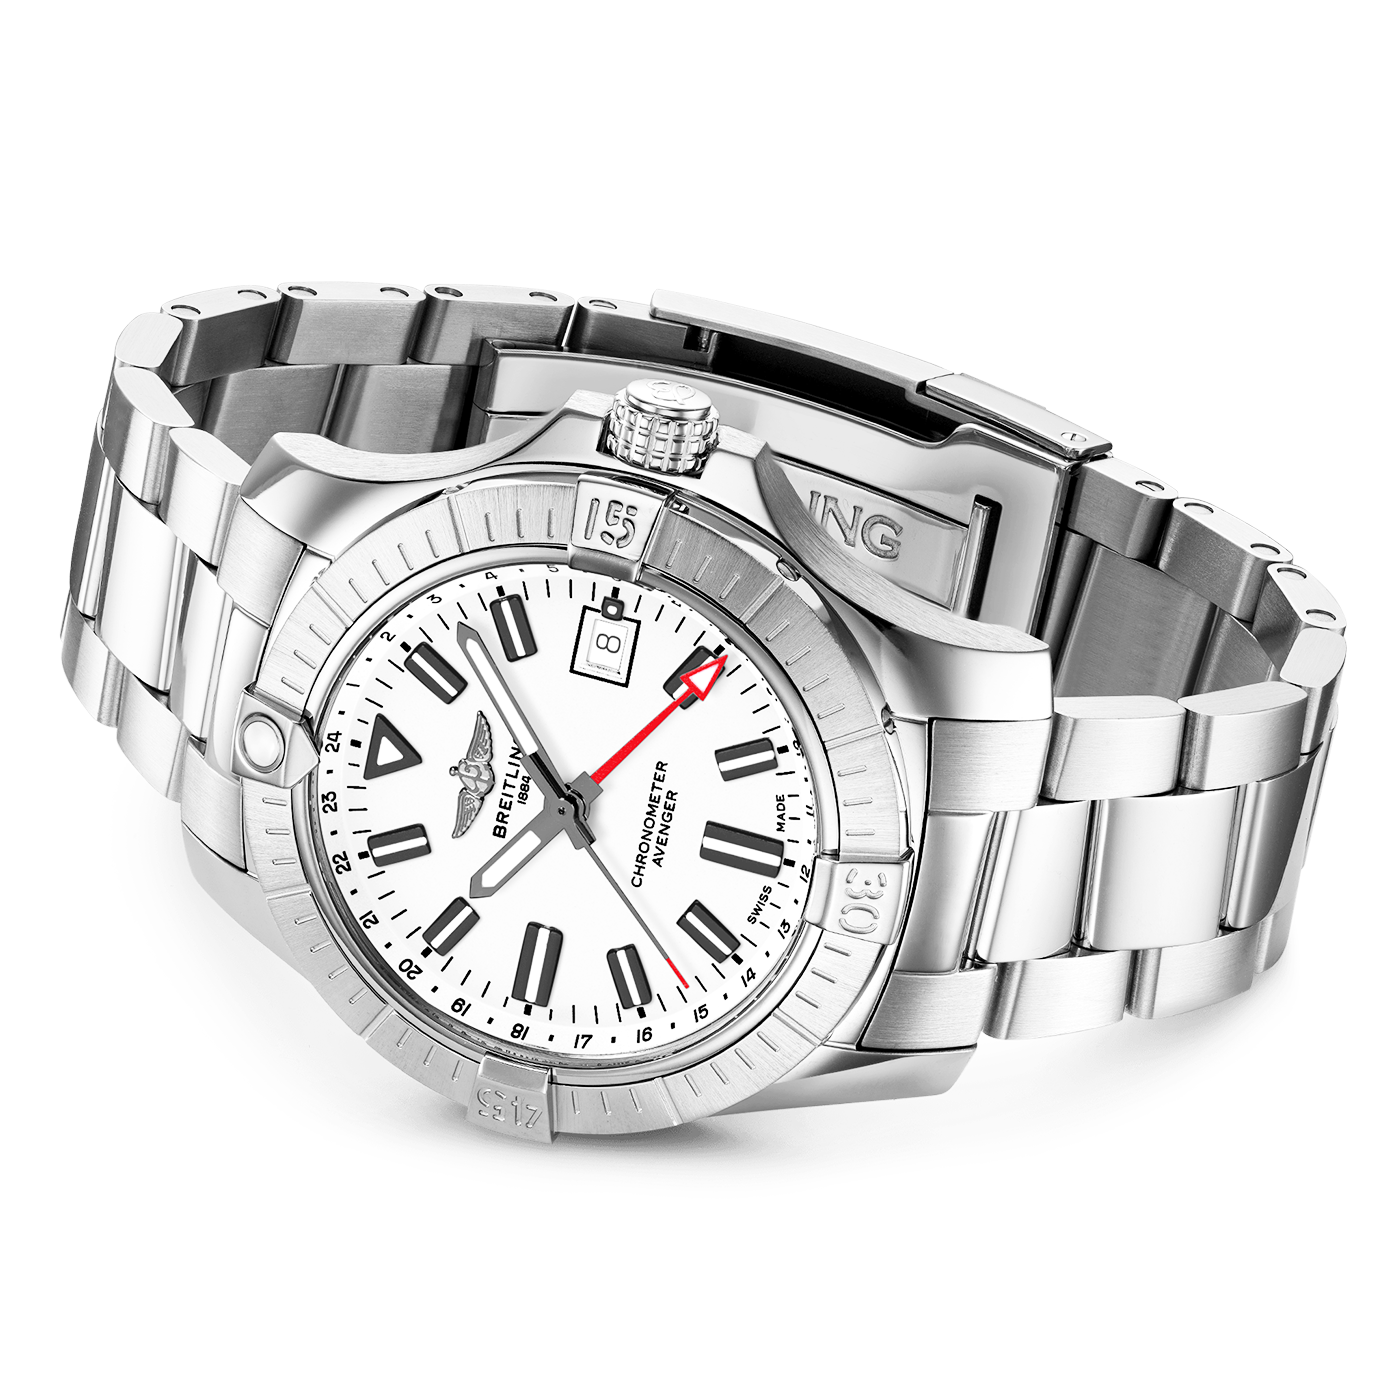 Avenger GMT 43mm White Dial Automatic Bracelet Watch